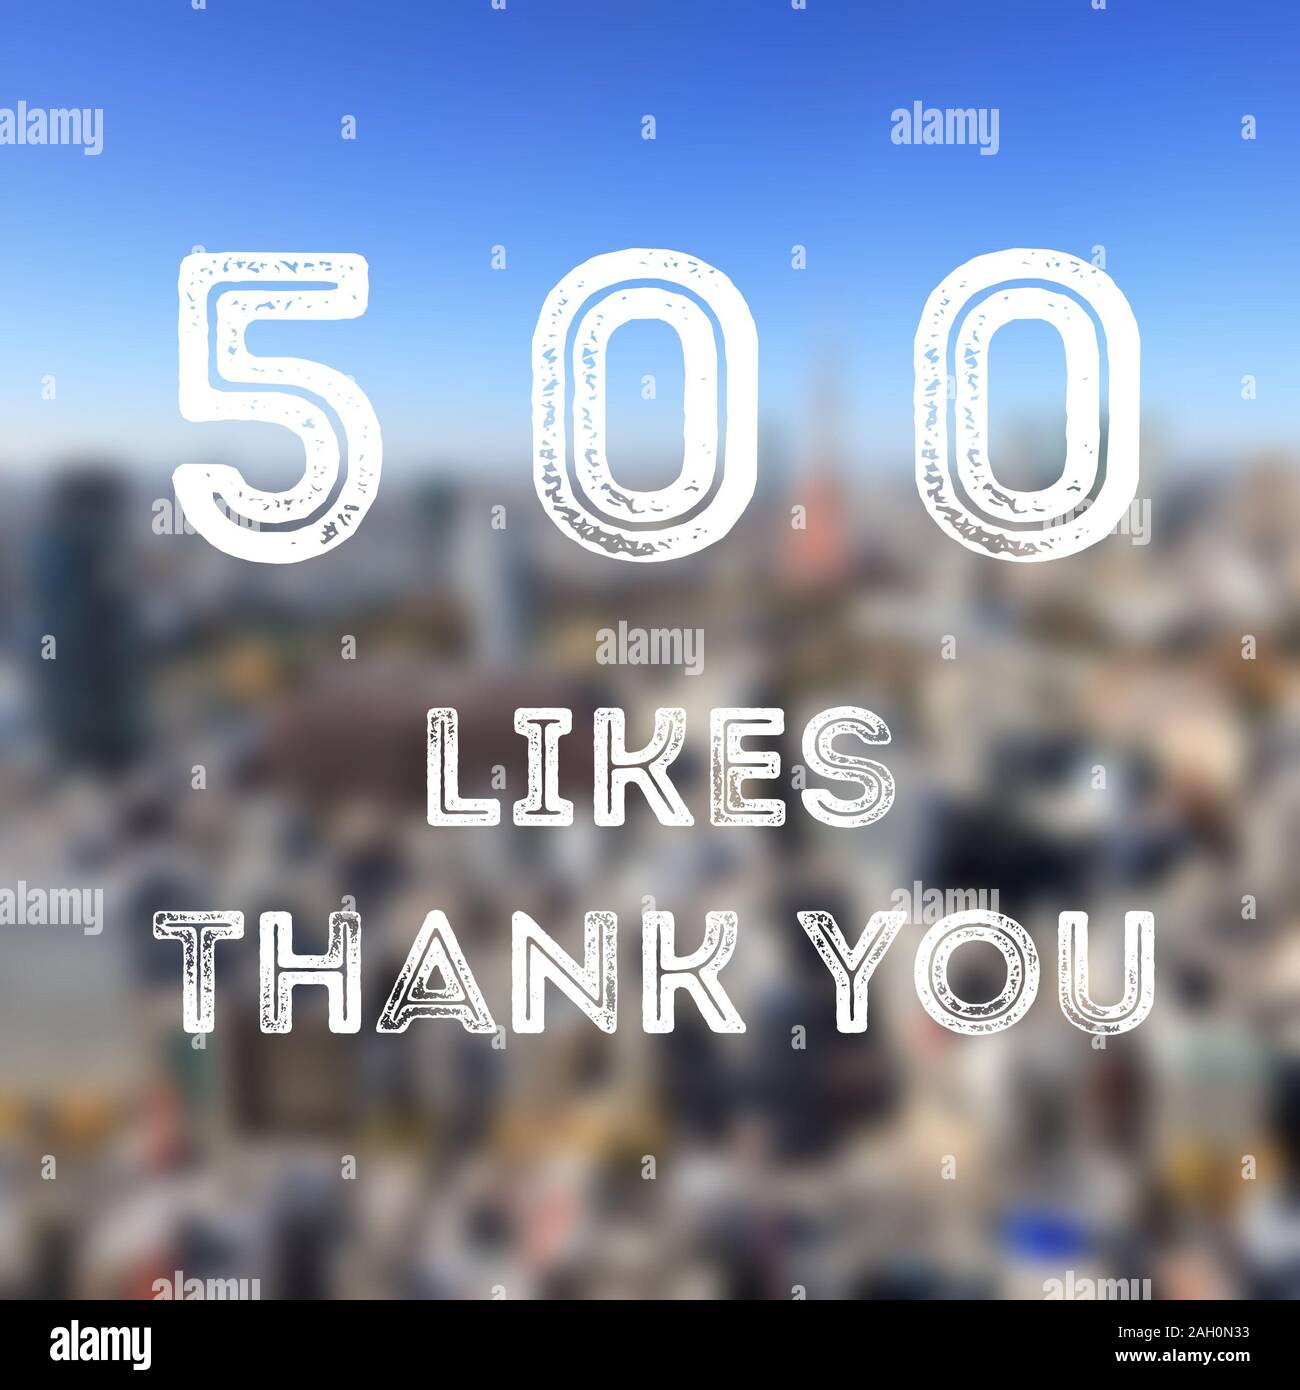 500 likes - social media milestone achievement. Online community thank you note. 500 follows. Stock Photo